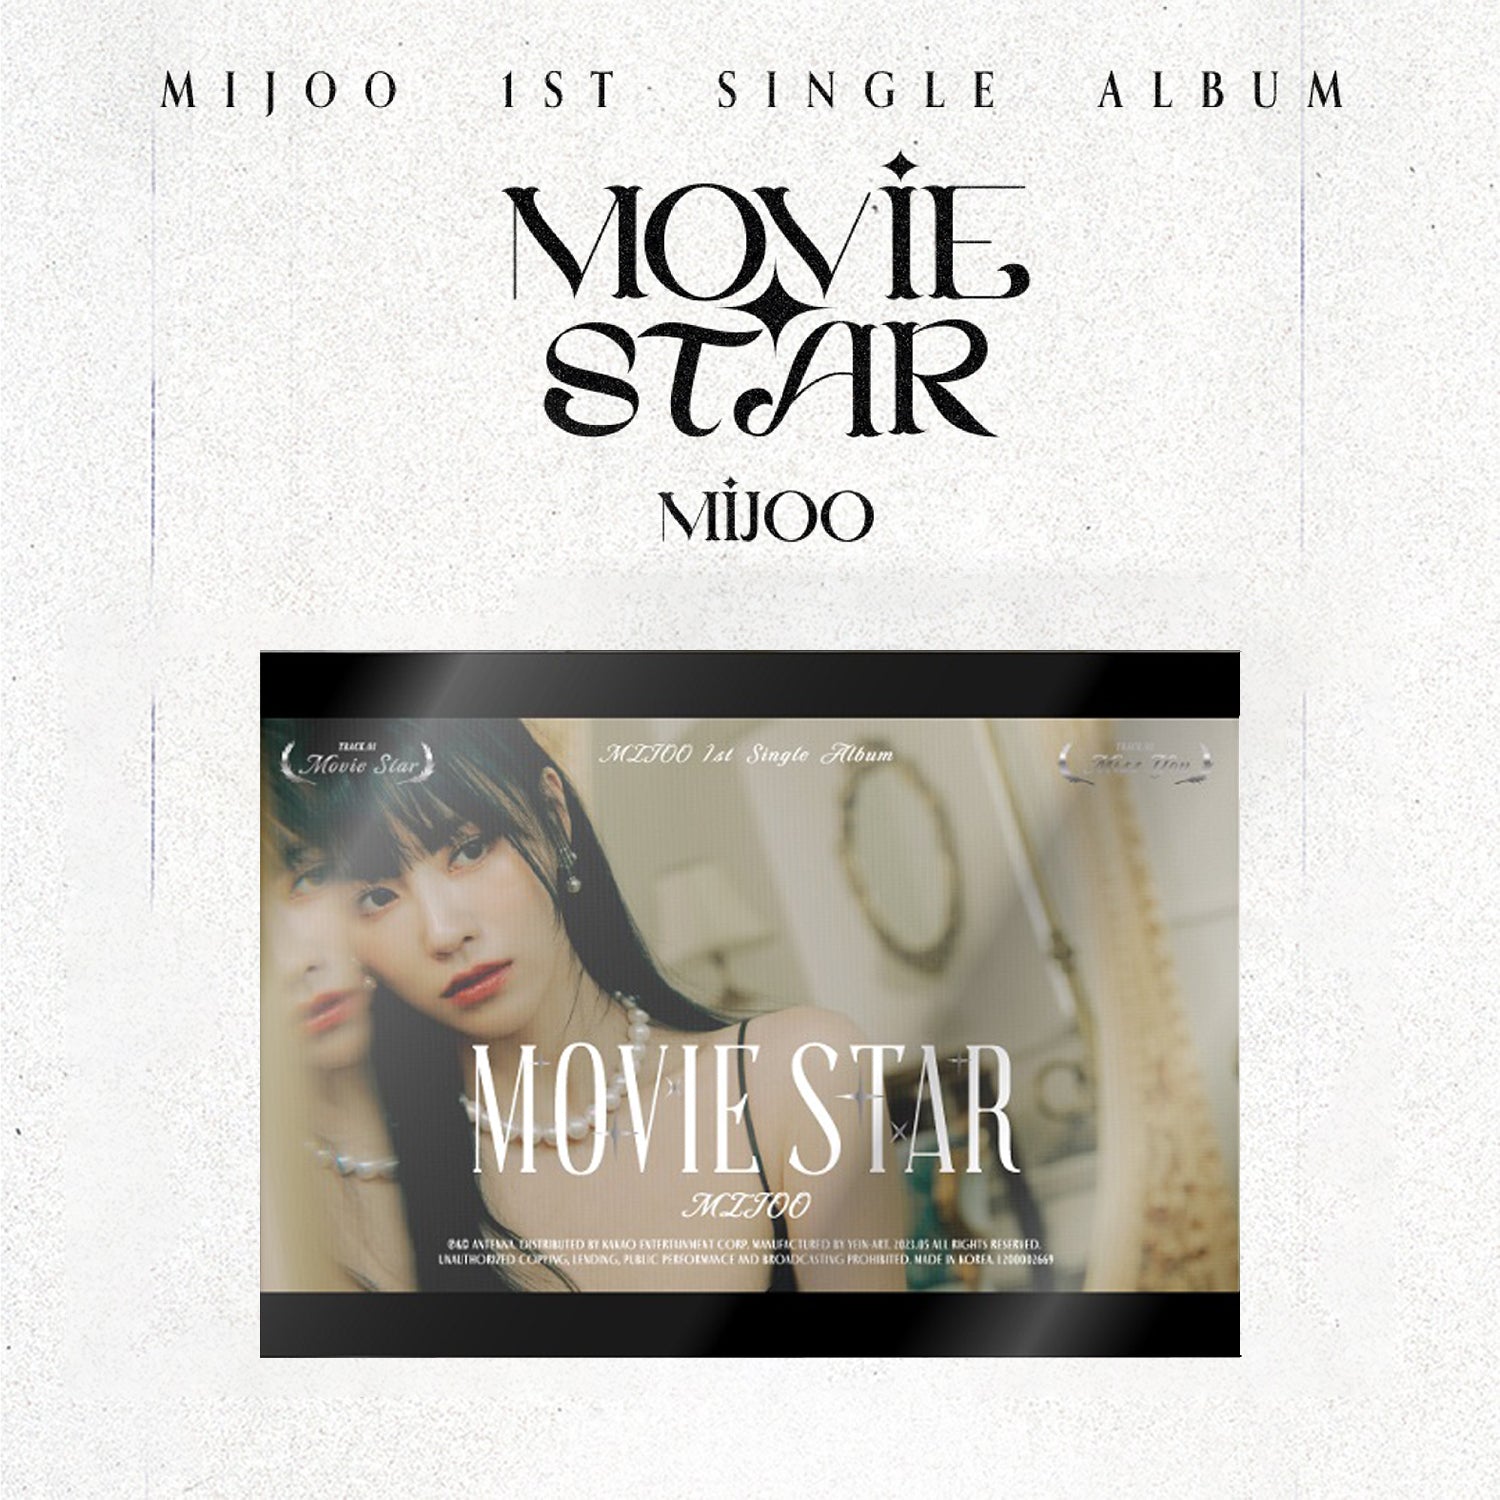 MIJOO 1ST SINGLE ALBUM 'MOVIE STAR' CLASSIC VERSION COVER